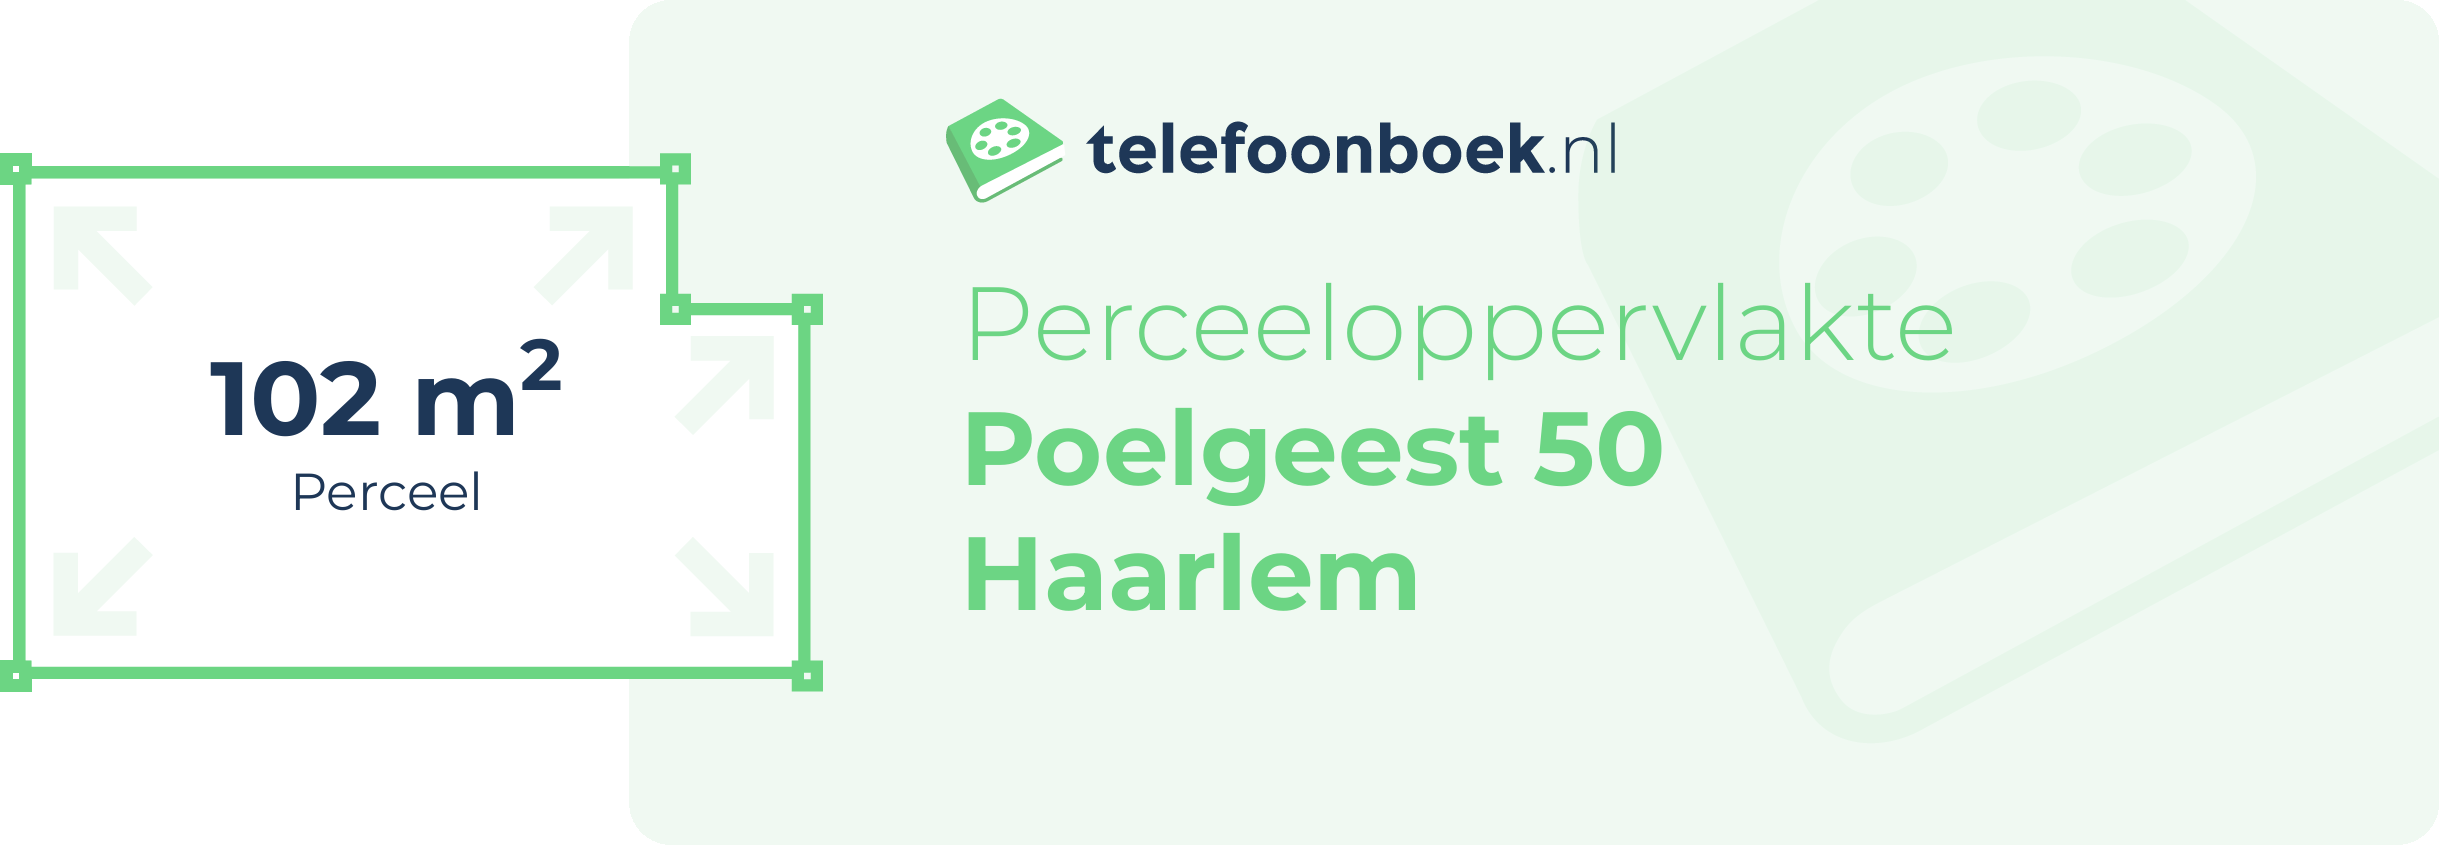 Perceeloppervlakte Poelgeest 50 Haarlem